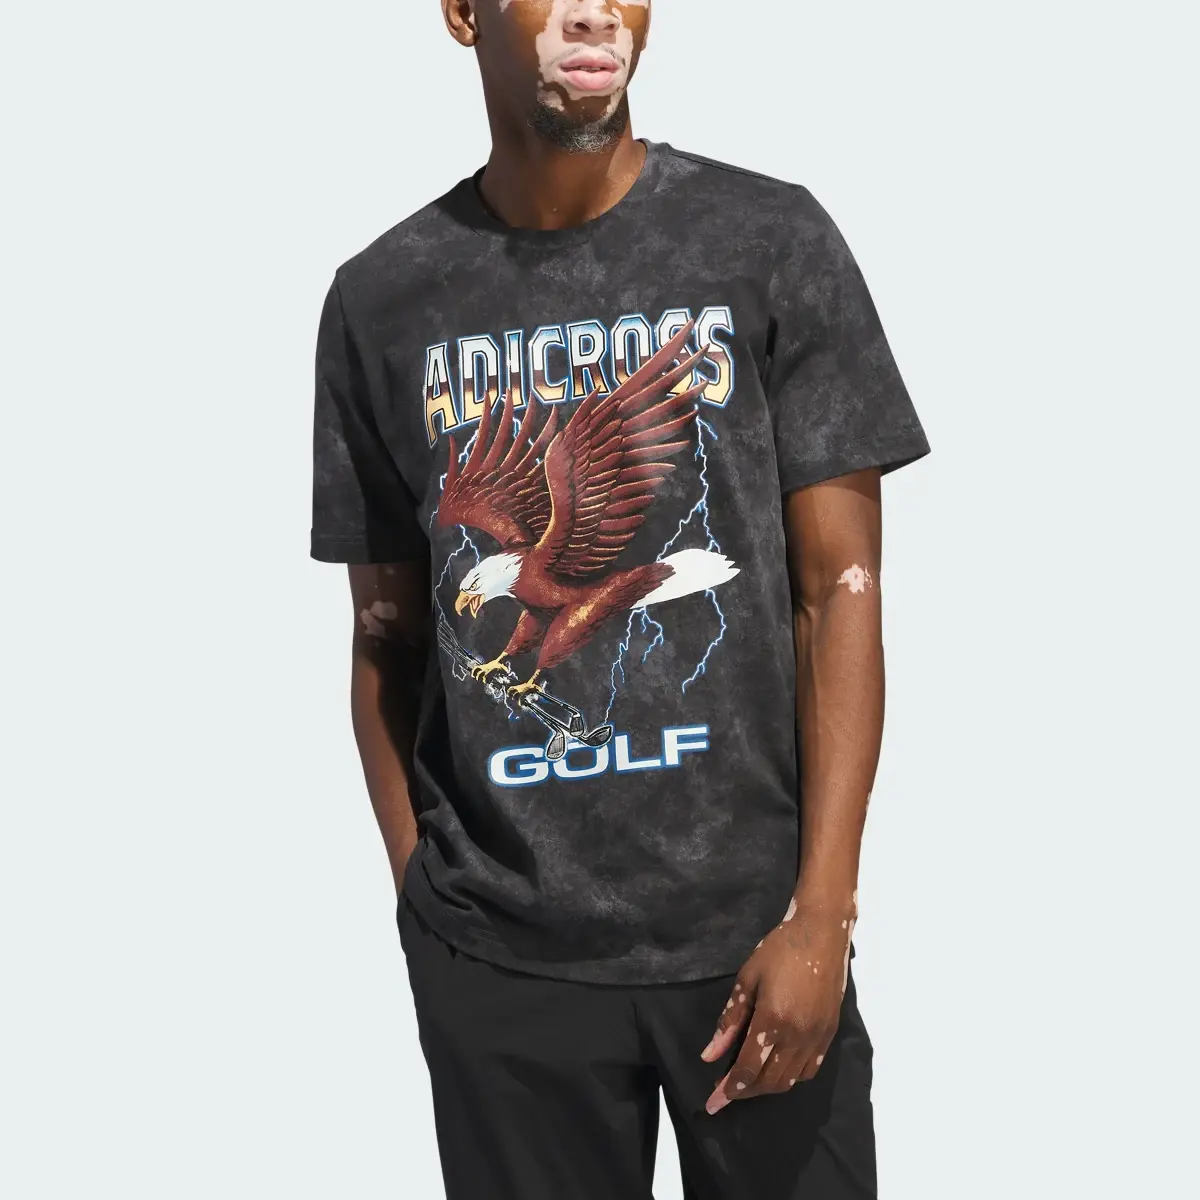 Adidas Camiseta Adicross Eagle Graphic. 1